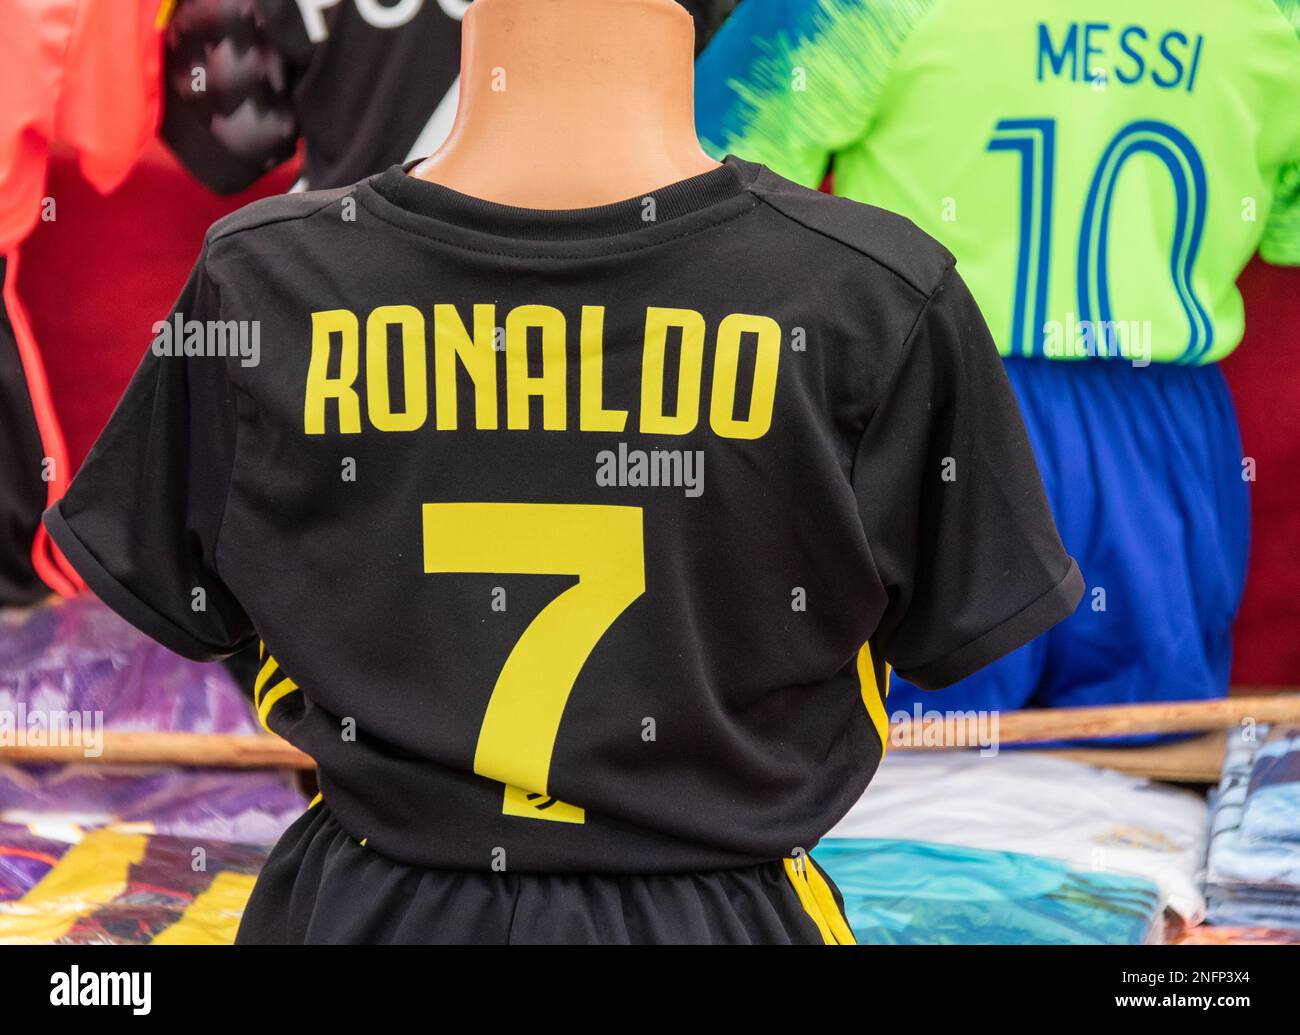 Ronaldo 7 and Messi 10 T-shirts Stock Photo